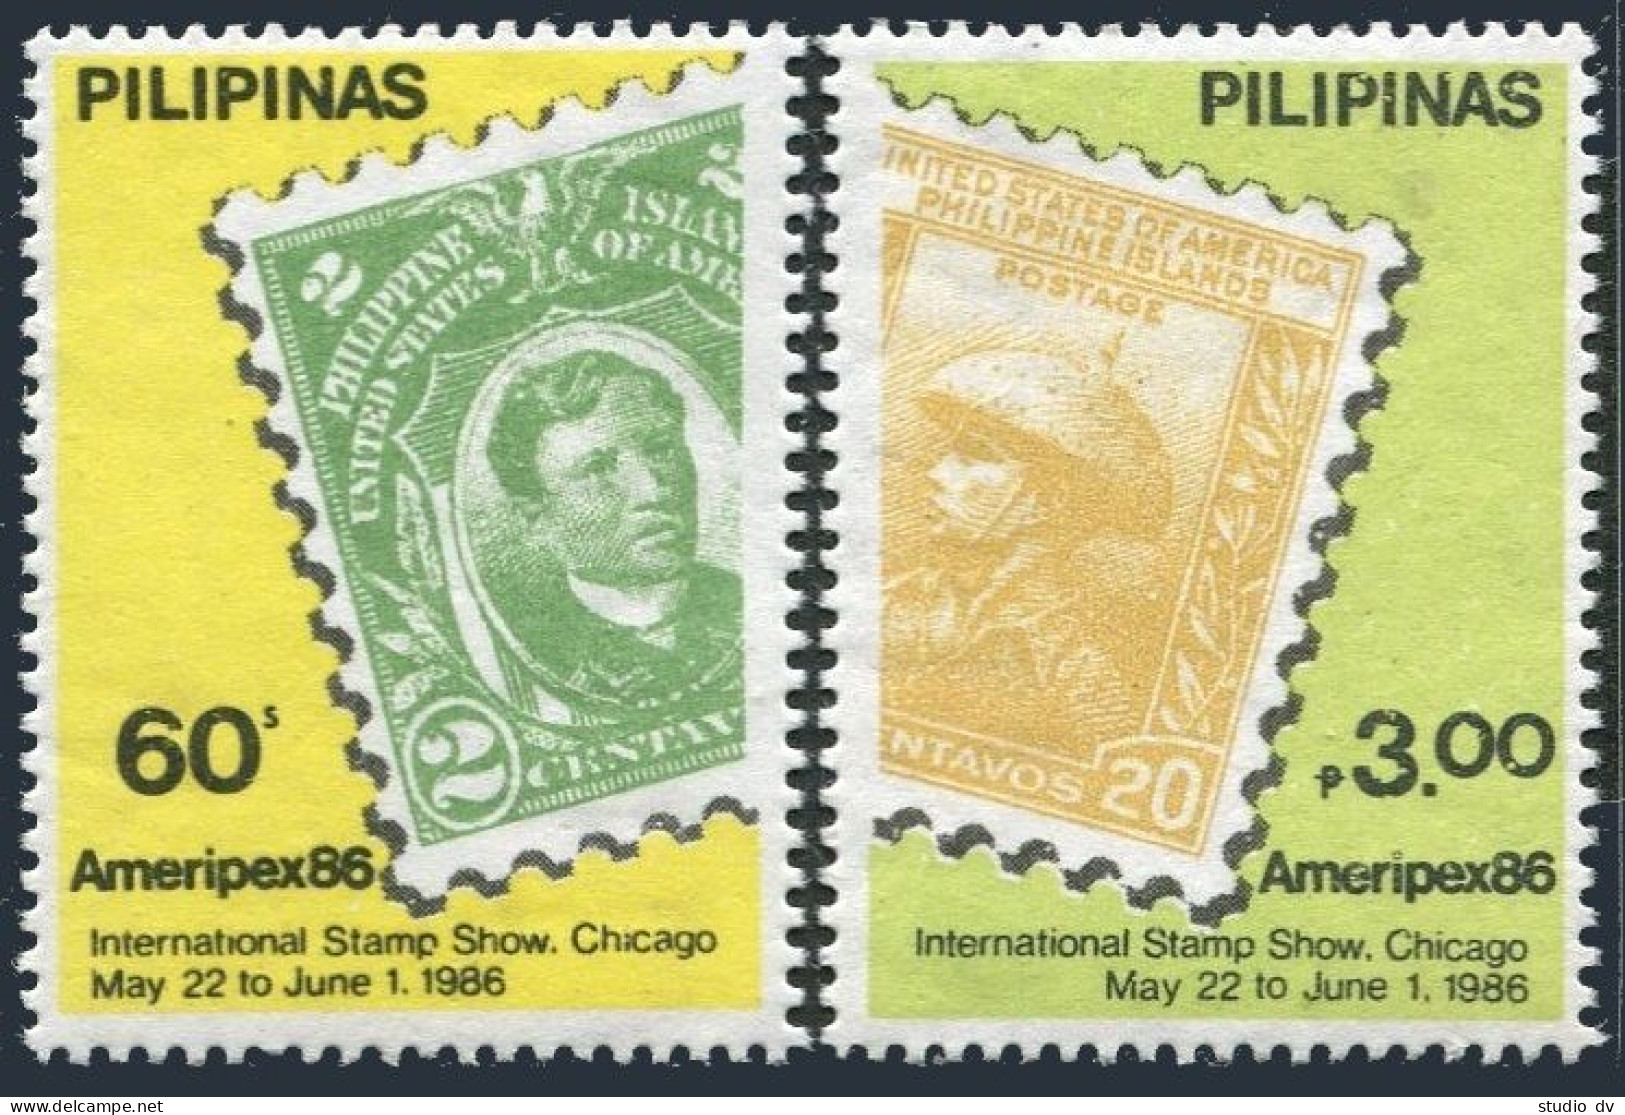 Philippines 1793-1794, MNH. Michel 1735-1736. AMERIPEX-1996. - Filippine